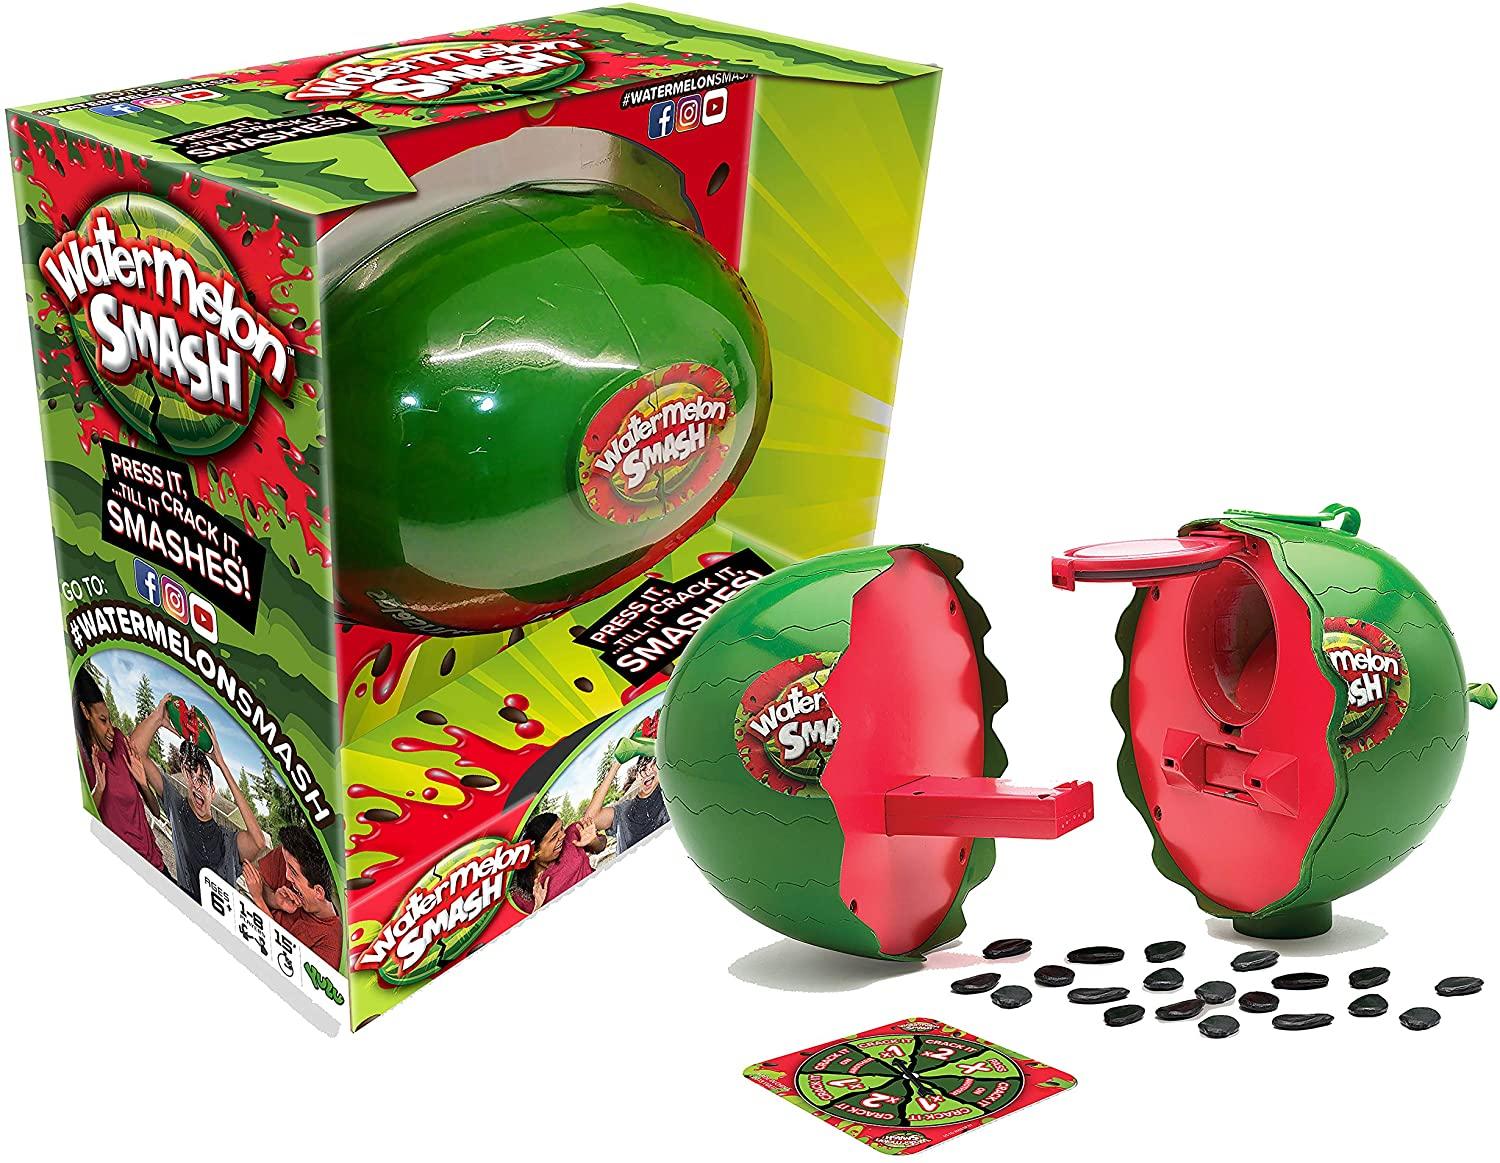 Yulu Watermelon Smash Toymaster Ballina